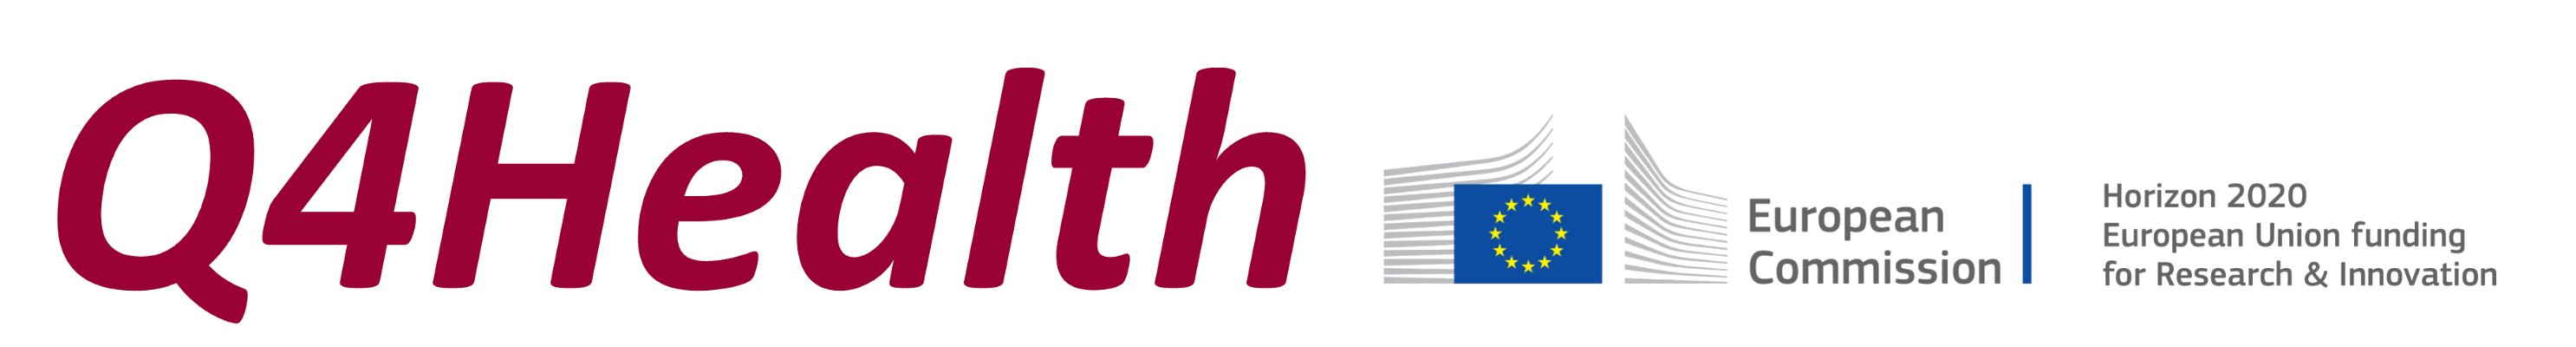 q4health_logo_high_quality